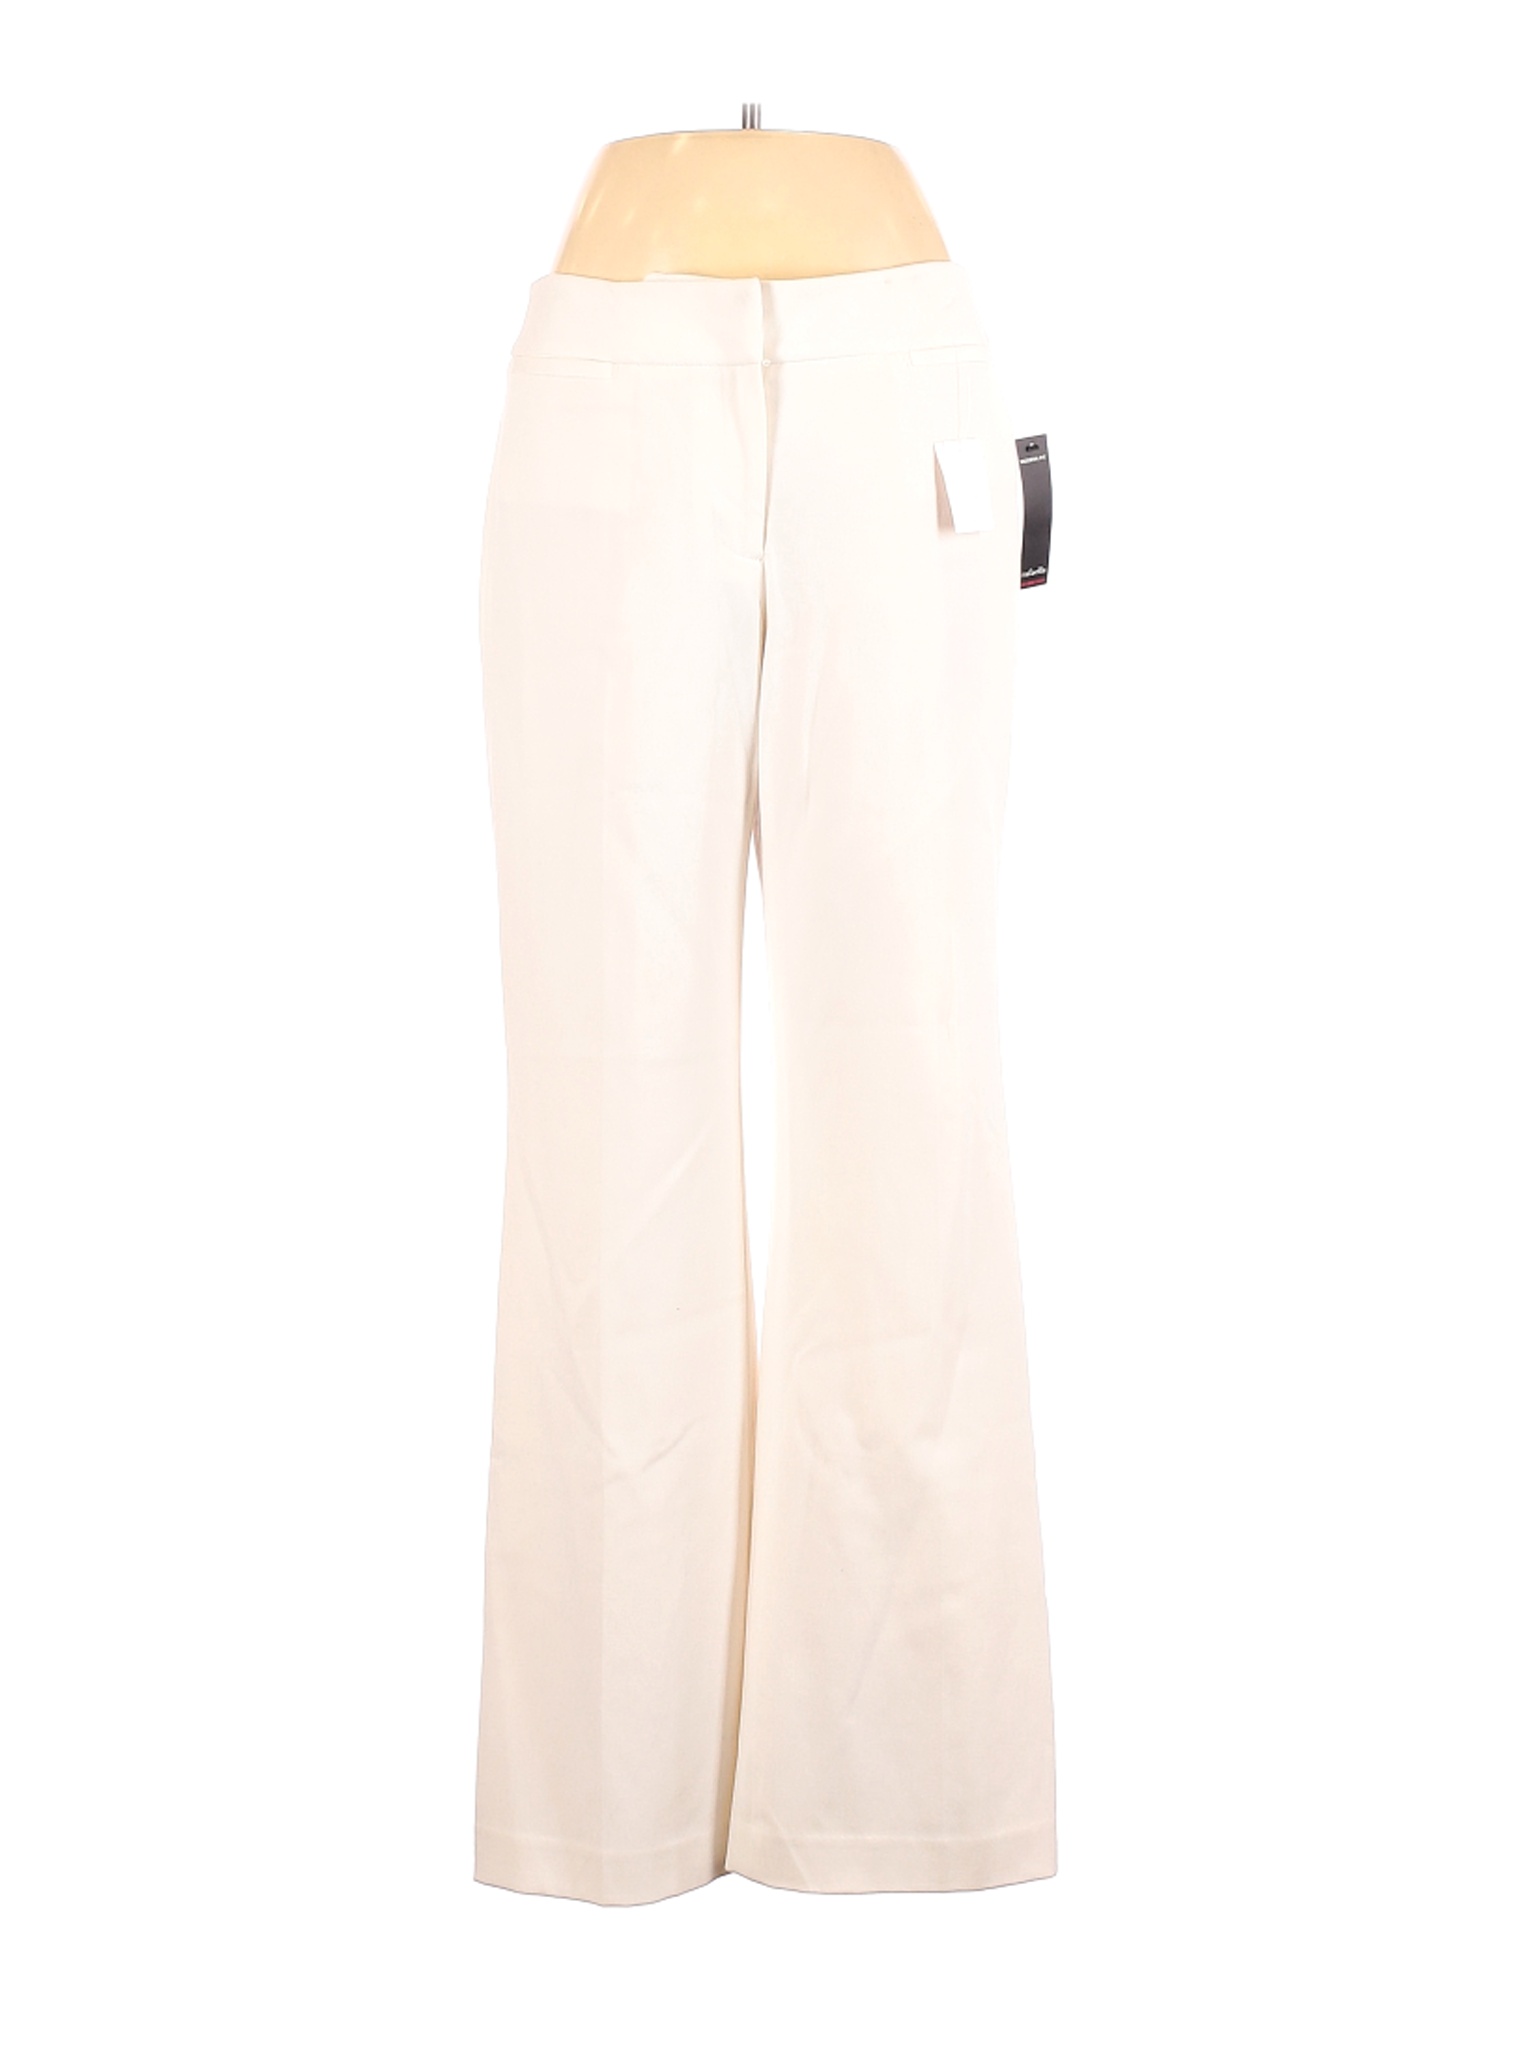 NWT Rafaella Women Ivory Dress Pants 8 | eBay